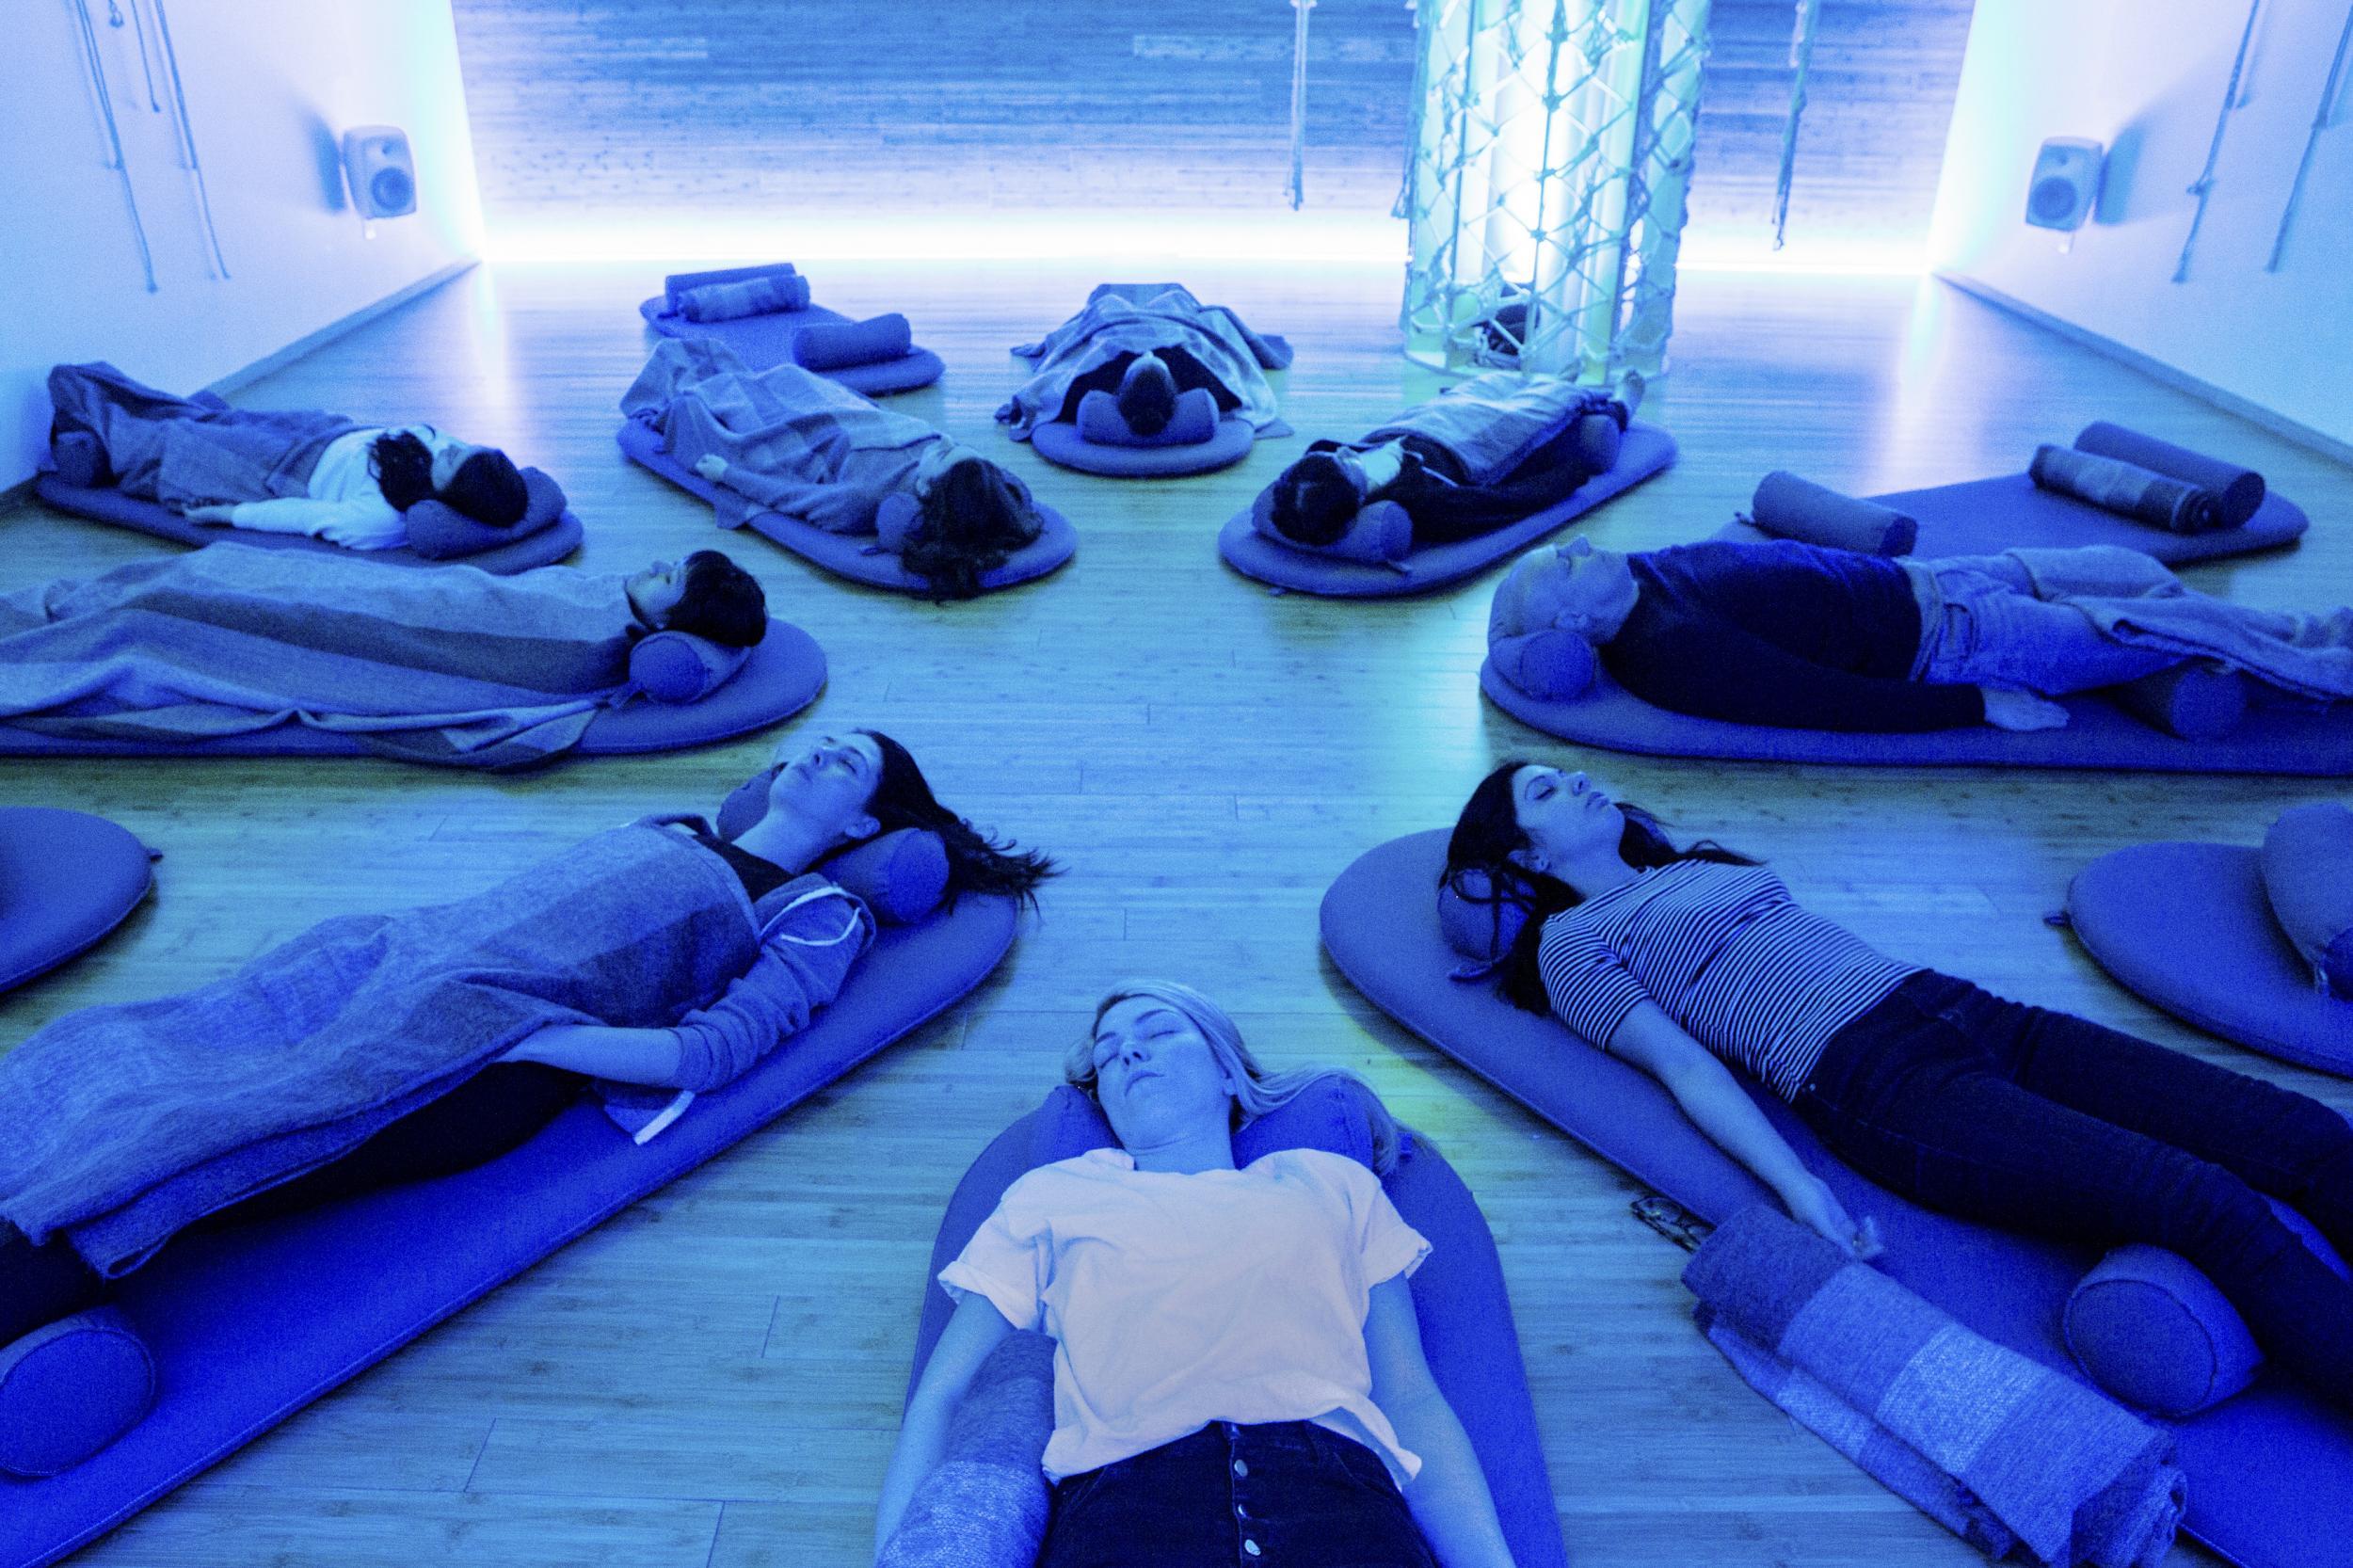 A Deep Rest “class” at Inscape, a meditation studio in the Chelsea neighborhood of Manhattan